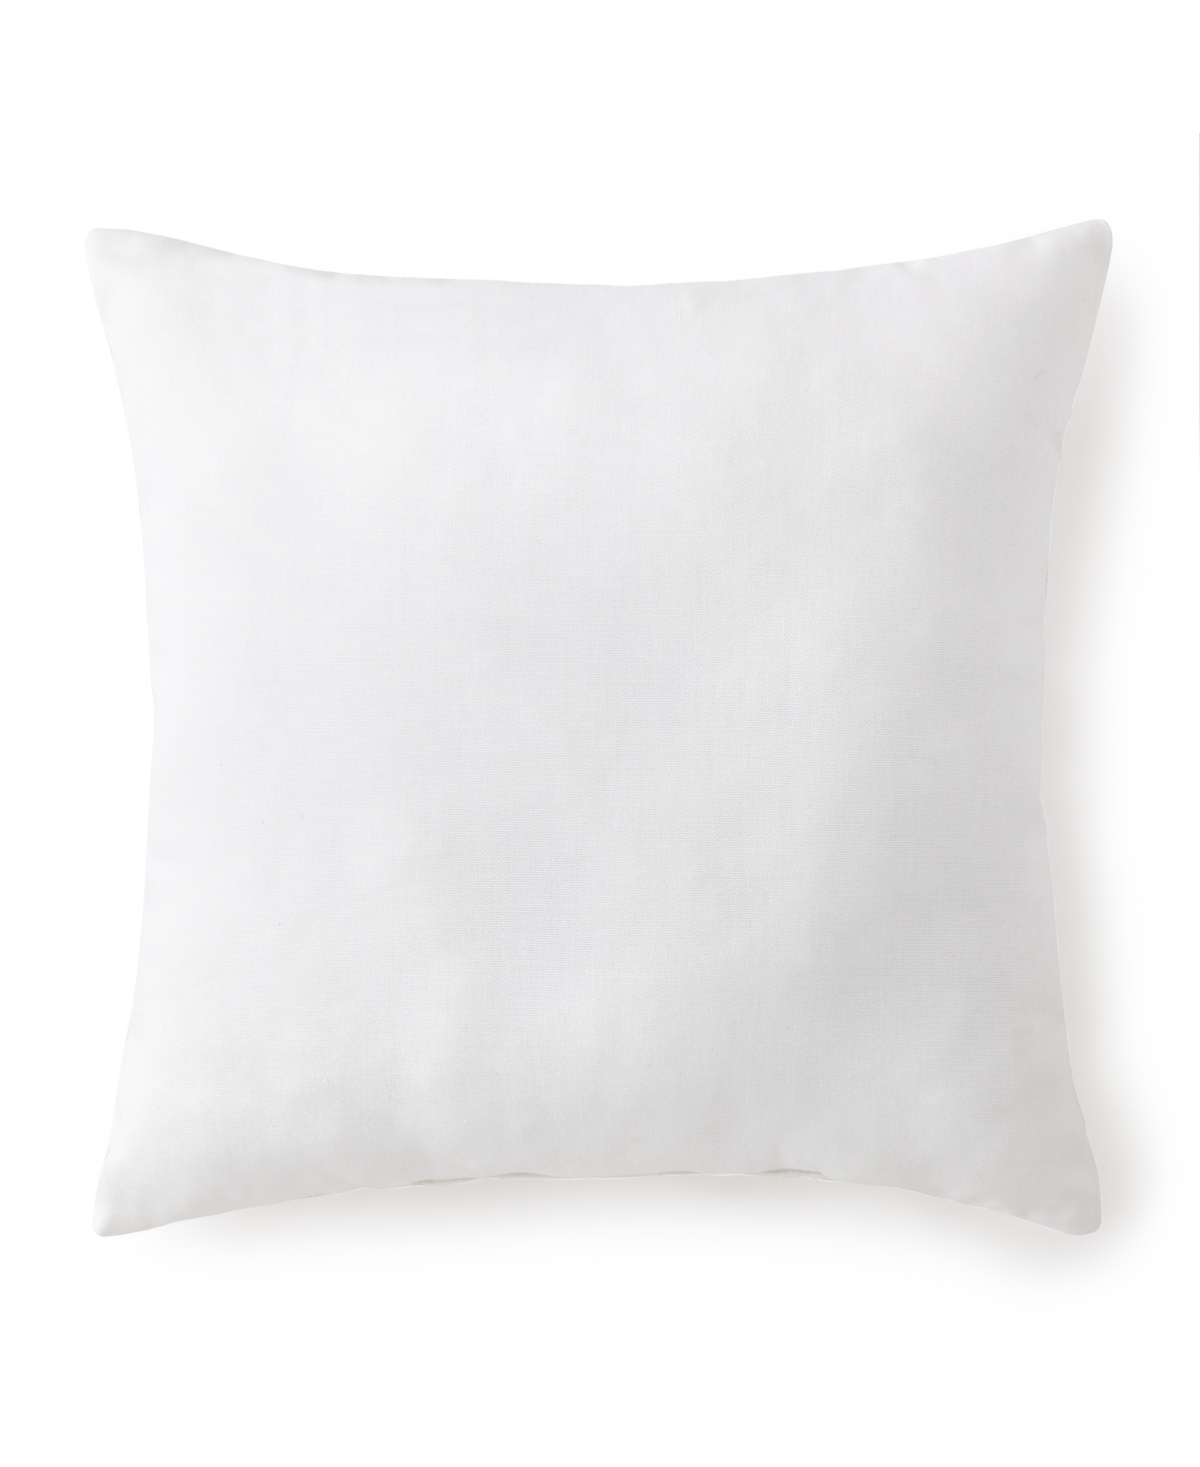 Seascape Square Cushion 18x18 - Solid White Bedding